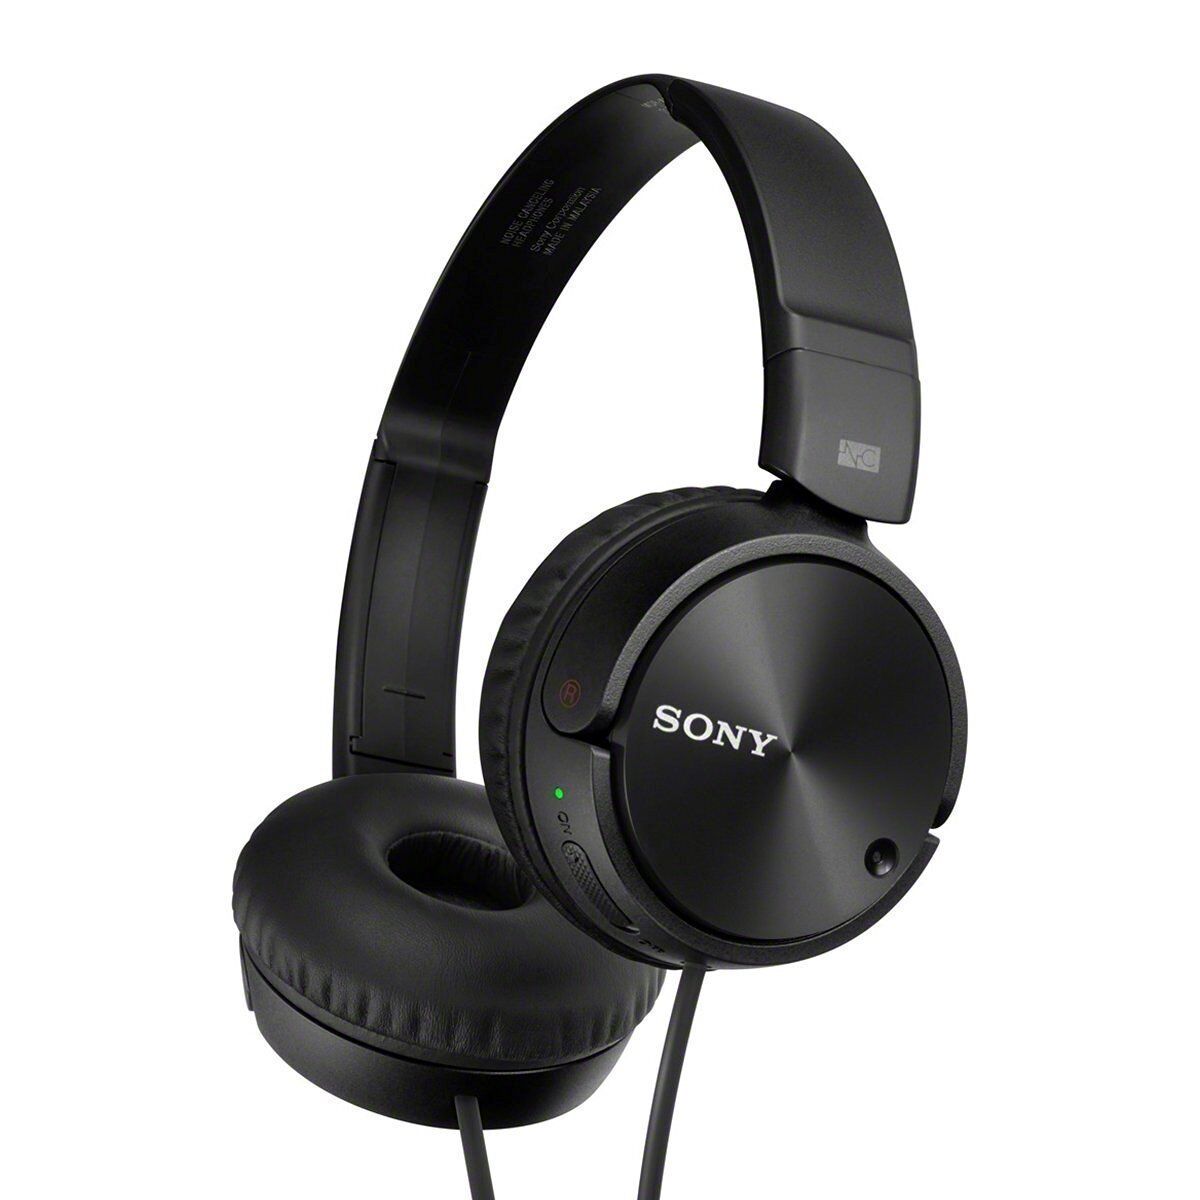 Sony Headphones Connection: Connecting Bluetooth Sony Headphones To IPhone